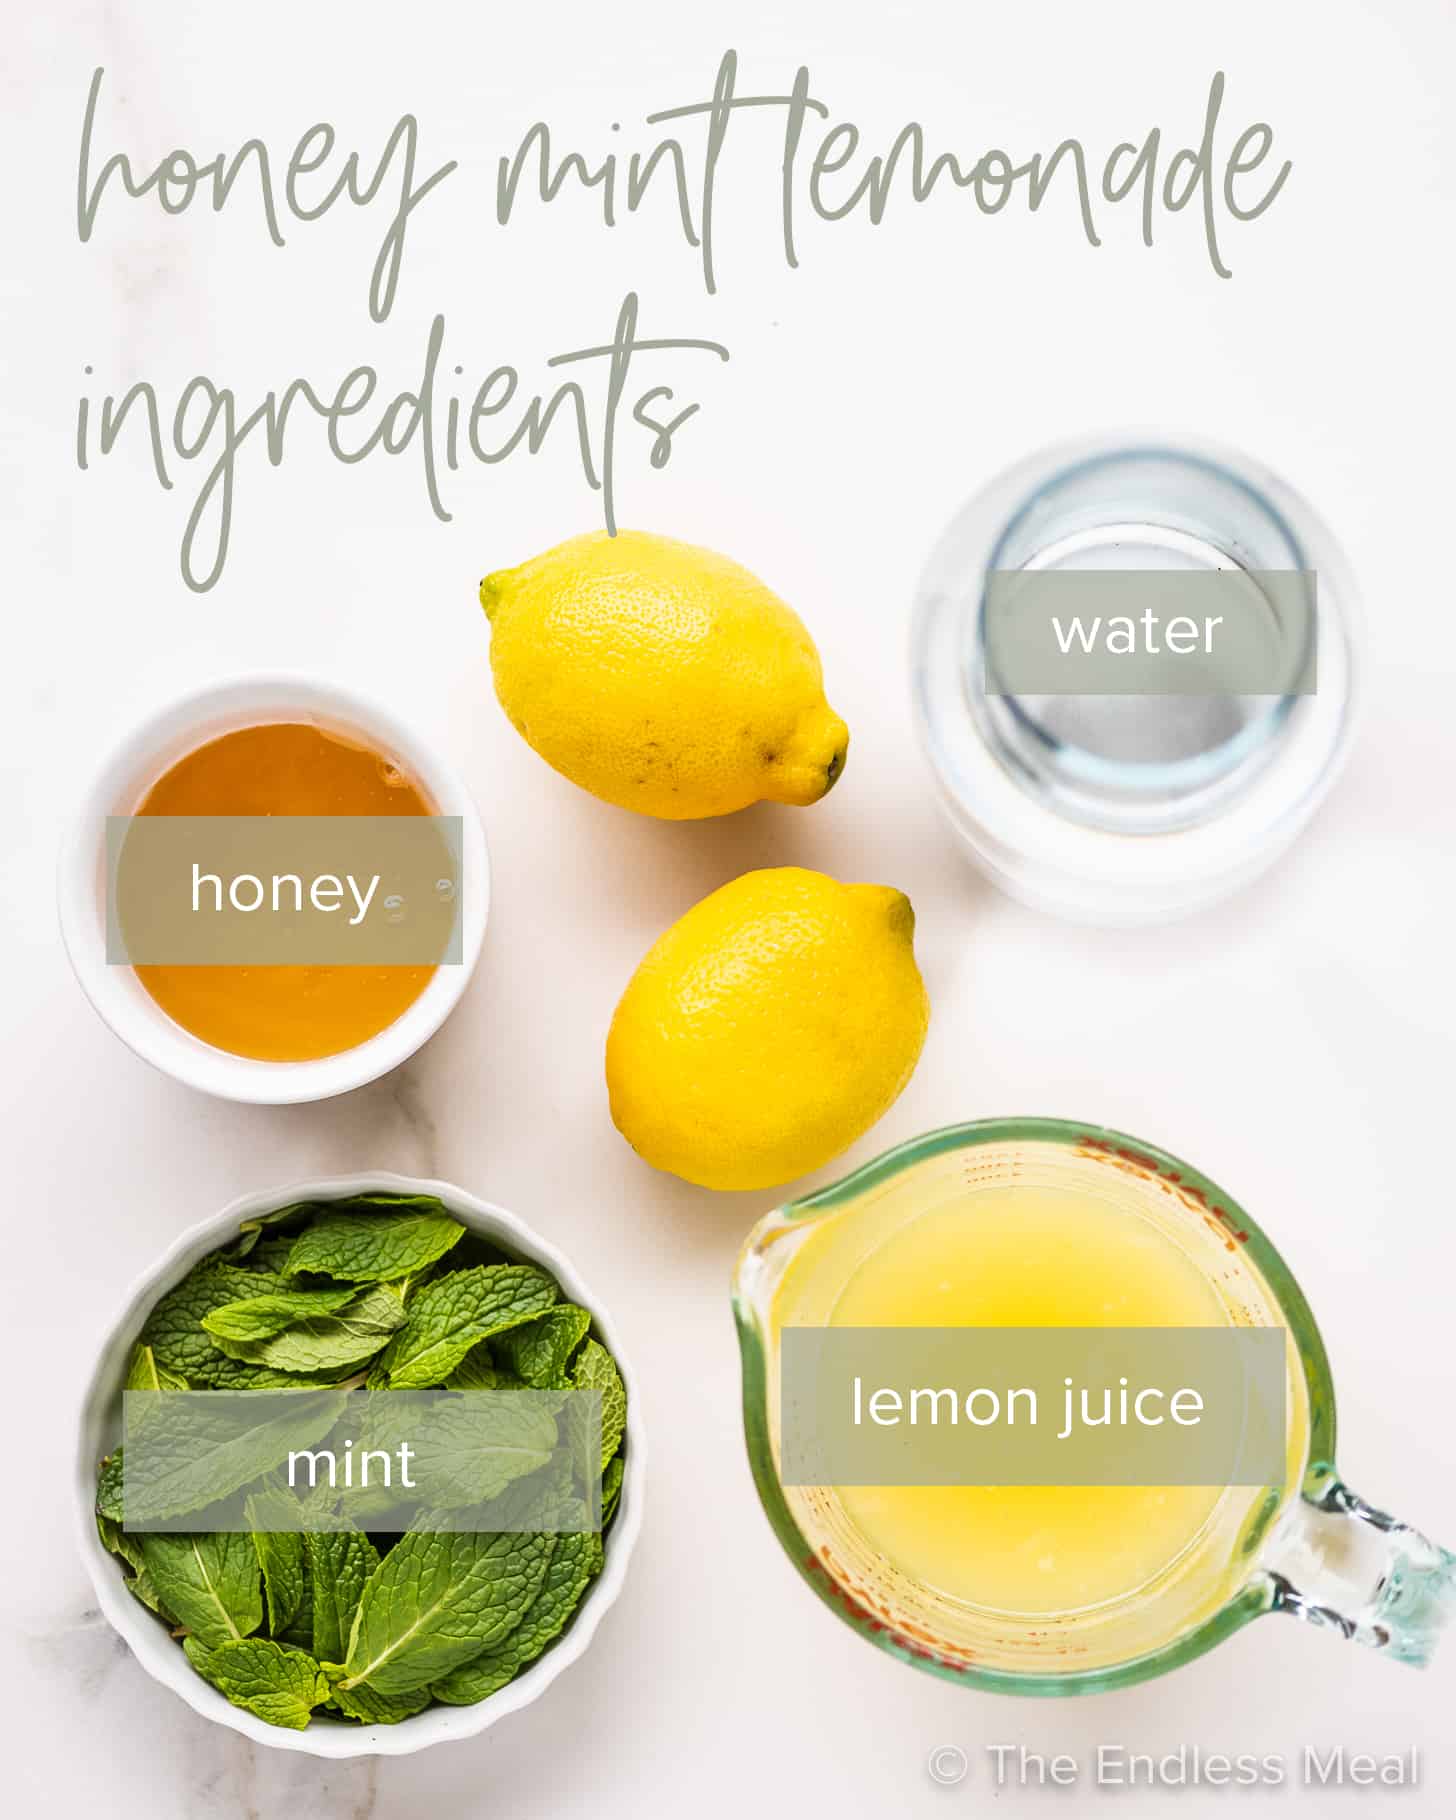 the ingredients needed to make mint lemonade